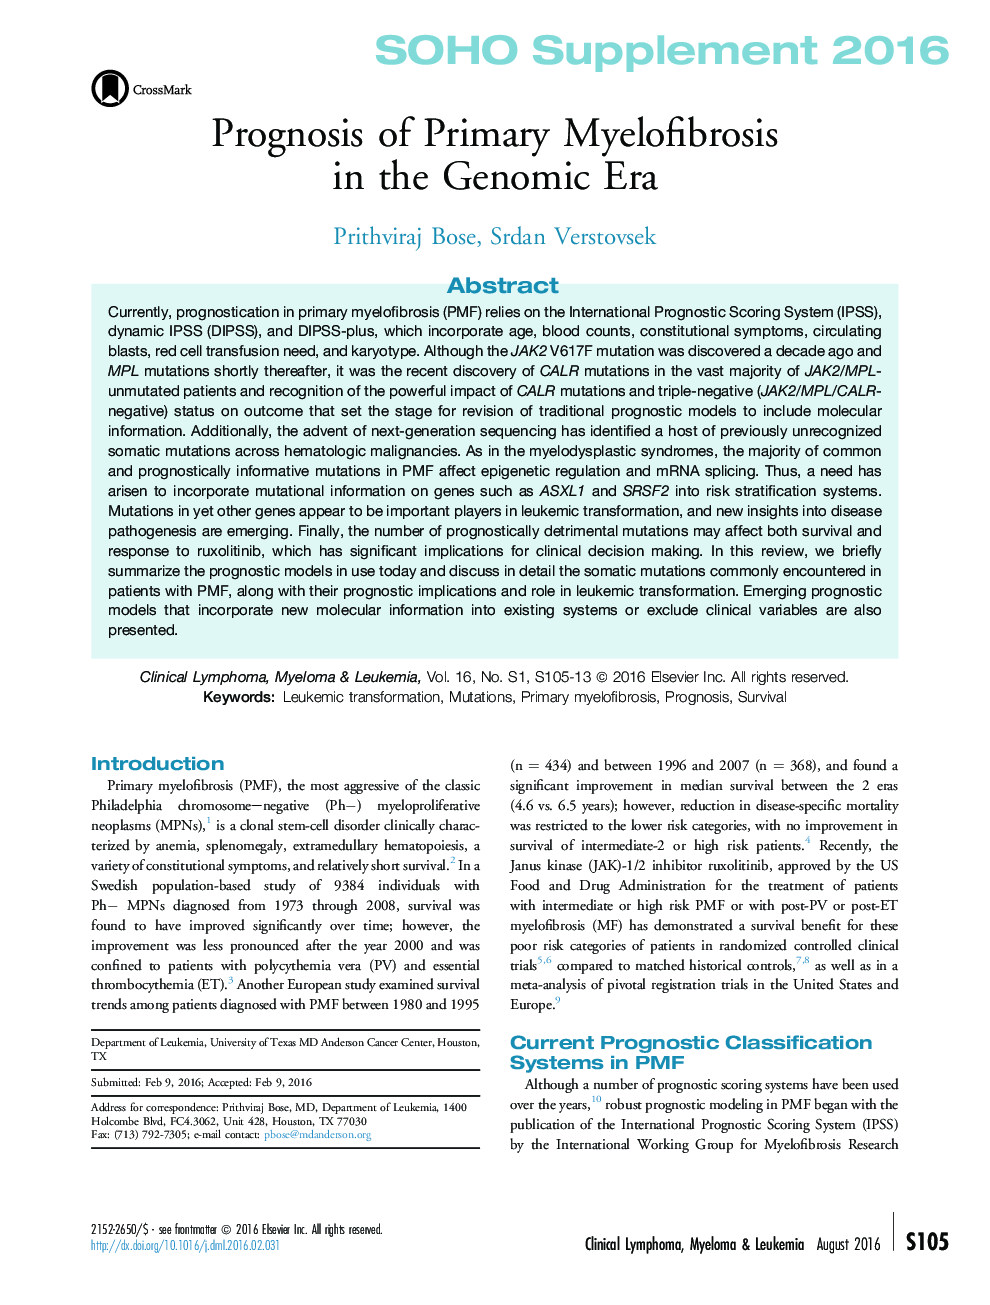 Prognosis of Primary Myelofibrosis in the Genomic Era